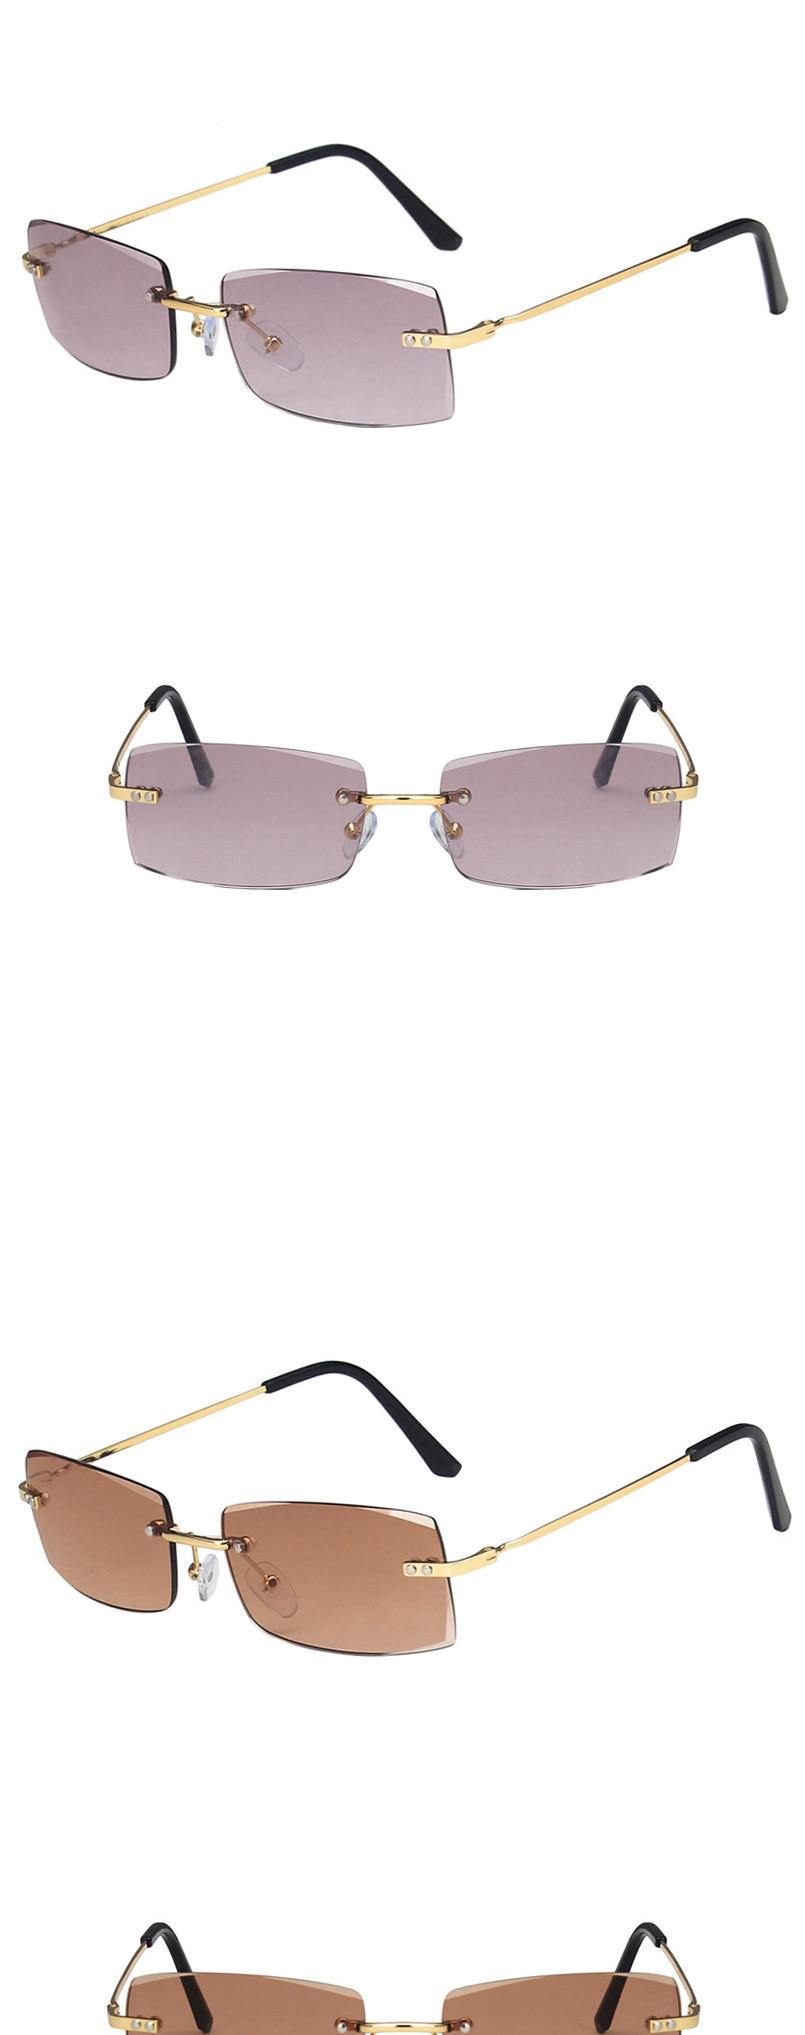 Fashion Gradually Purple Trimmed Rimless Small Frame Sunglasses,Women Sunglasses